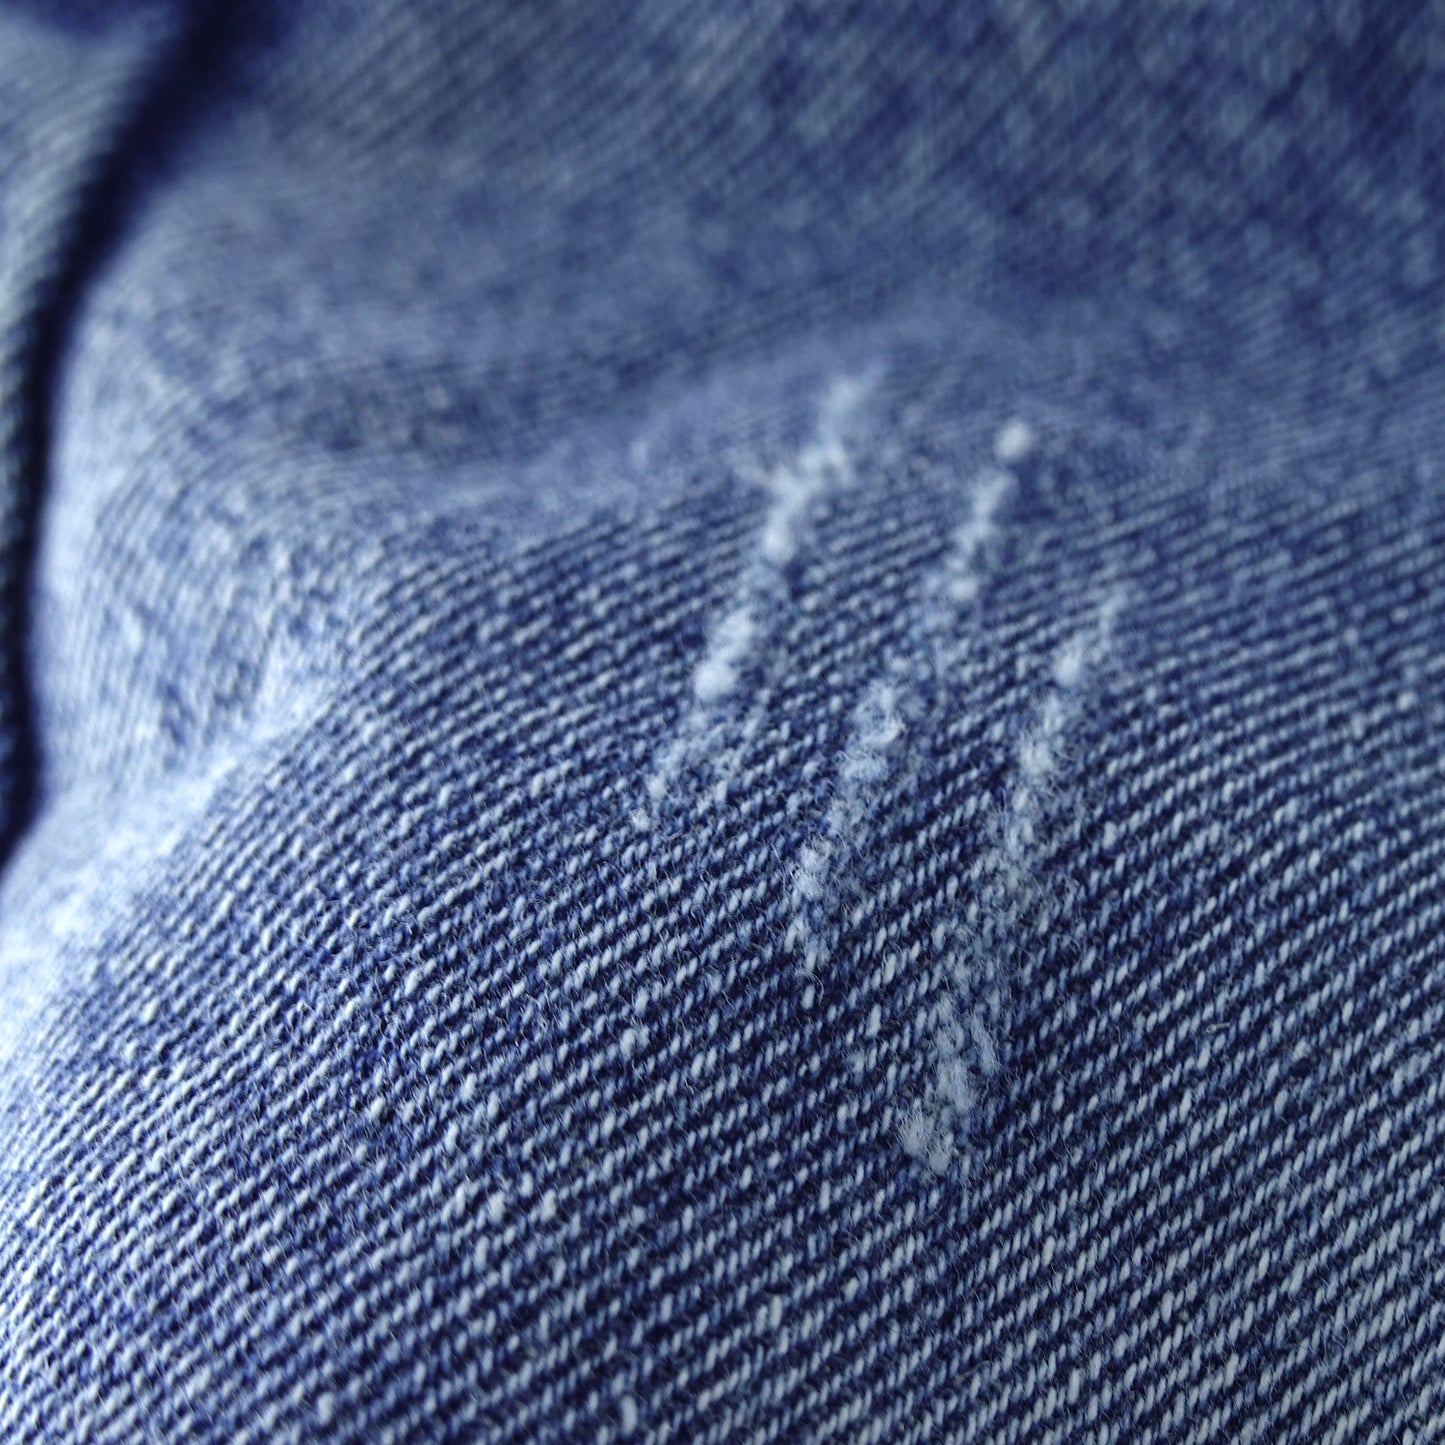 Baby Denim Shorts,Elastic WaistBand Inside Ripped Holes Summer Short Jeans